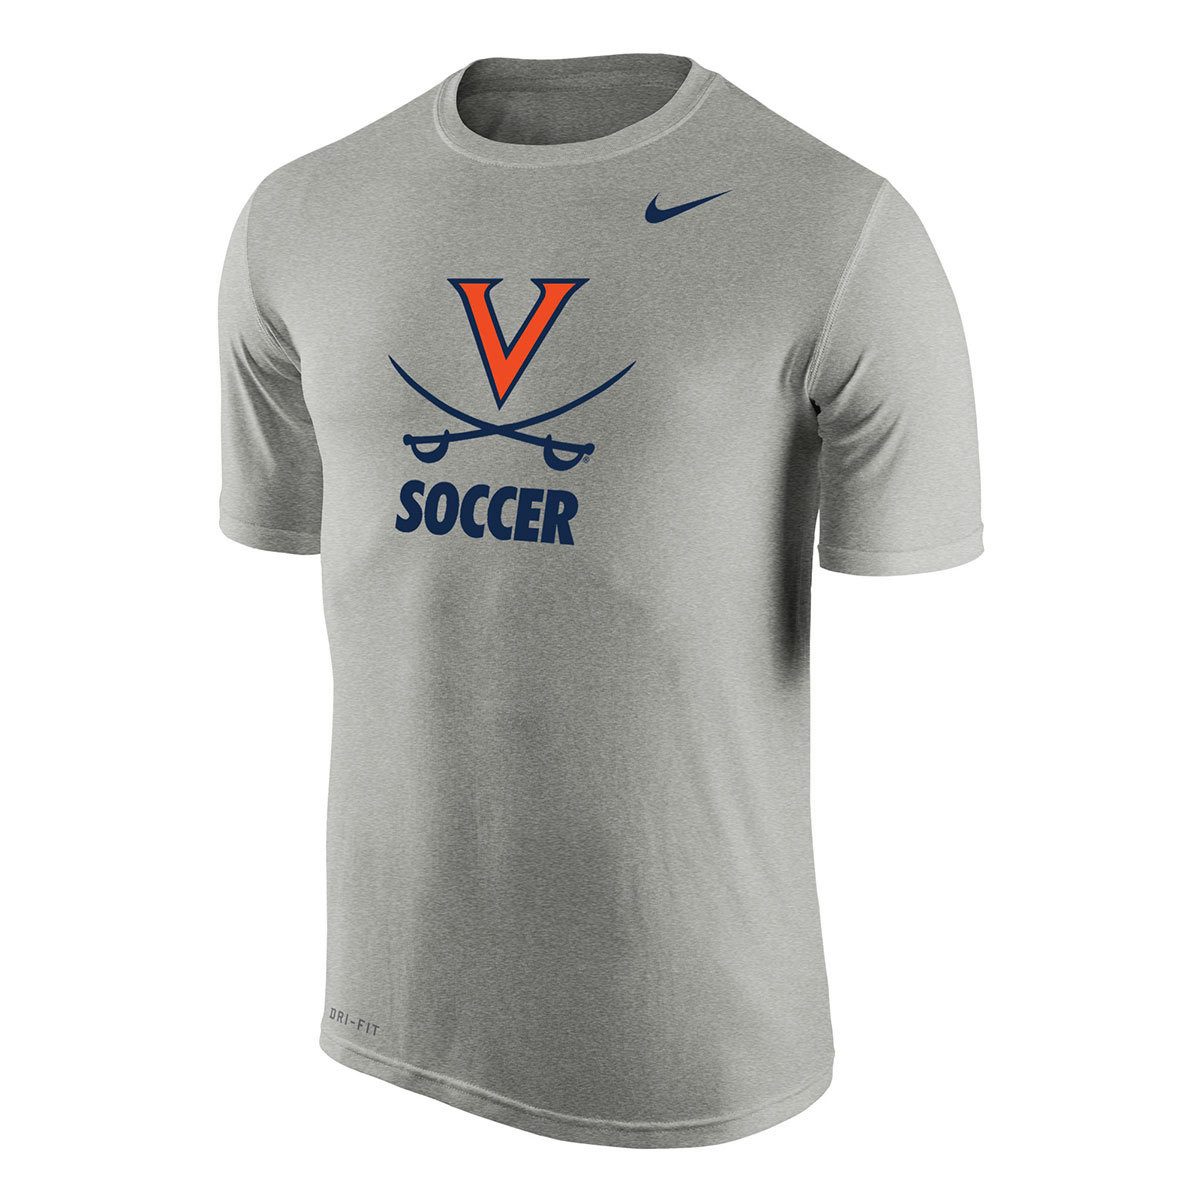 Virginia Cavaliers soccer jersey